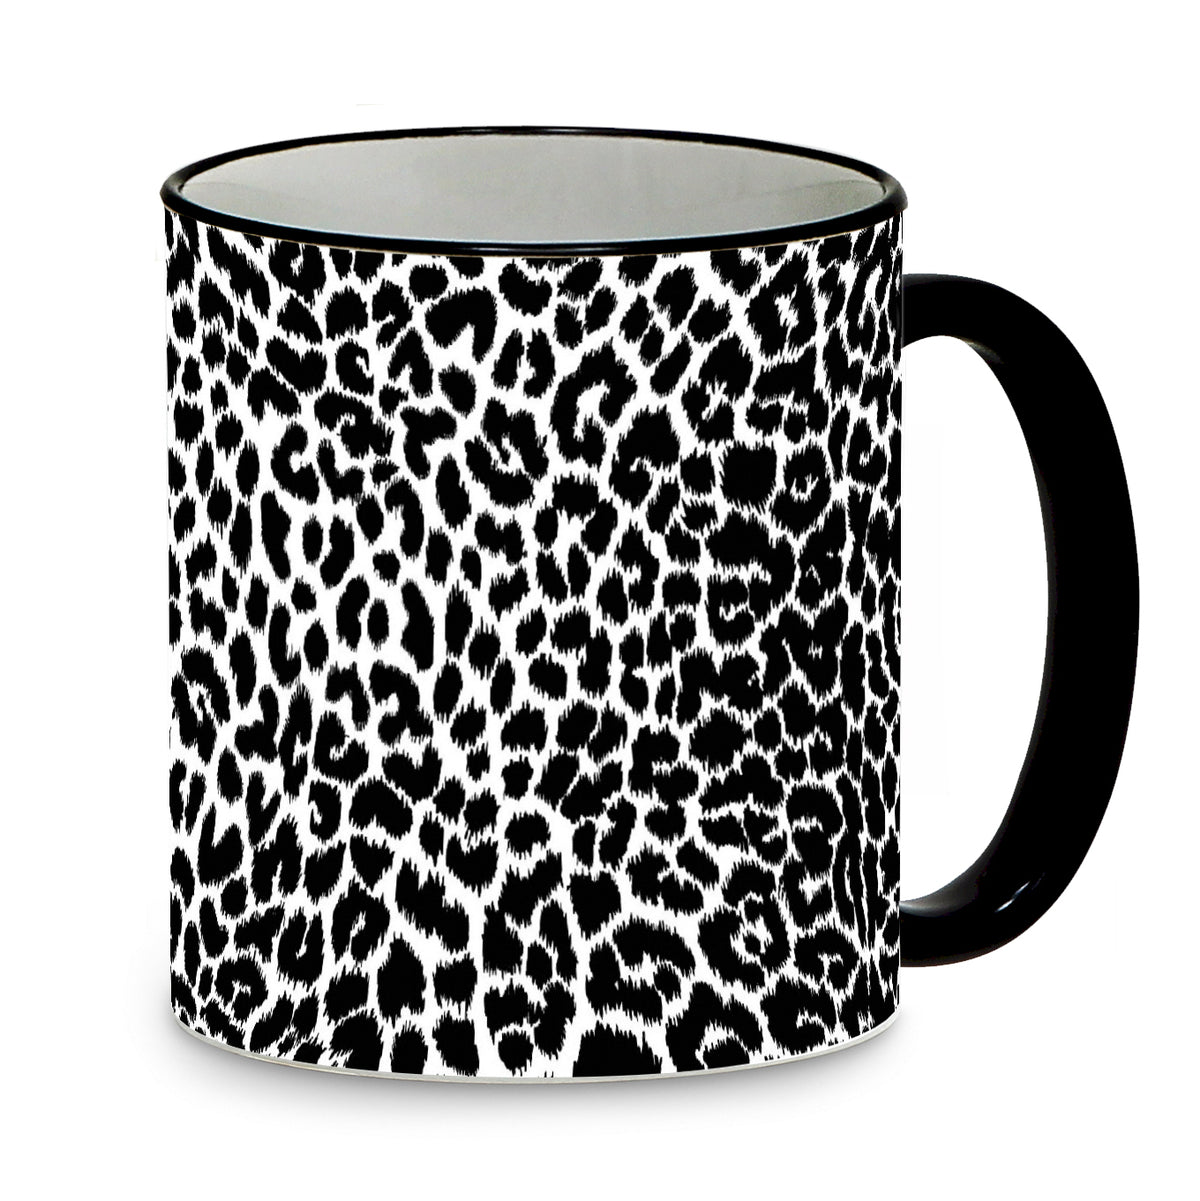 SUBLIMART: Pets Art - Beautiful Black &amp; White Leopard Design Mug with Black Rim and Handle - Artistica.com